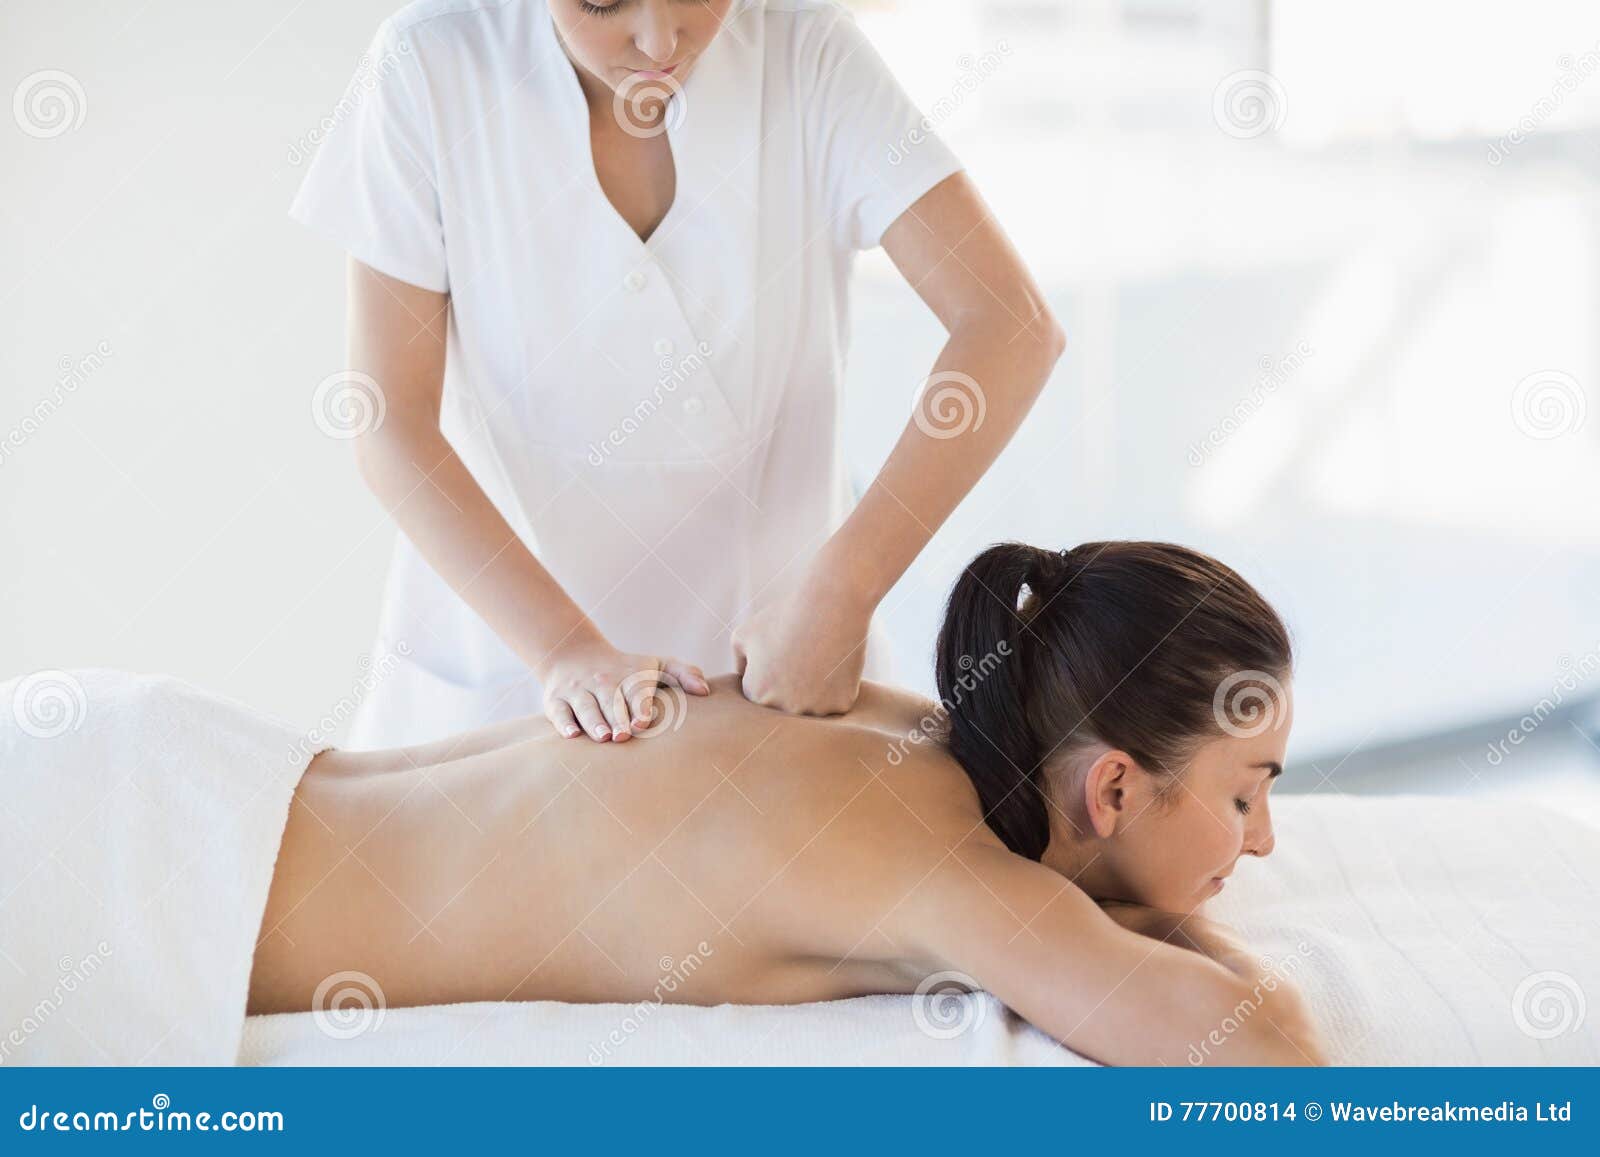 Naked Girls Giving Massage